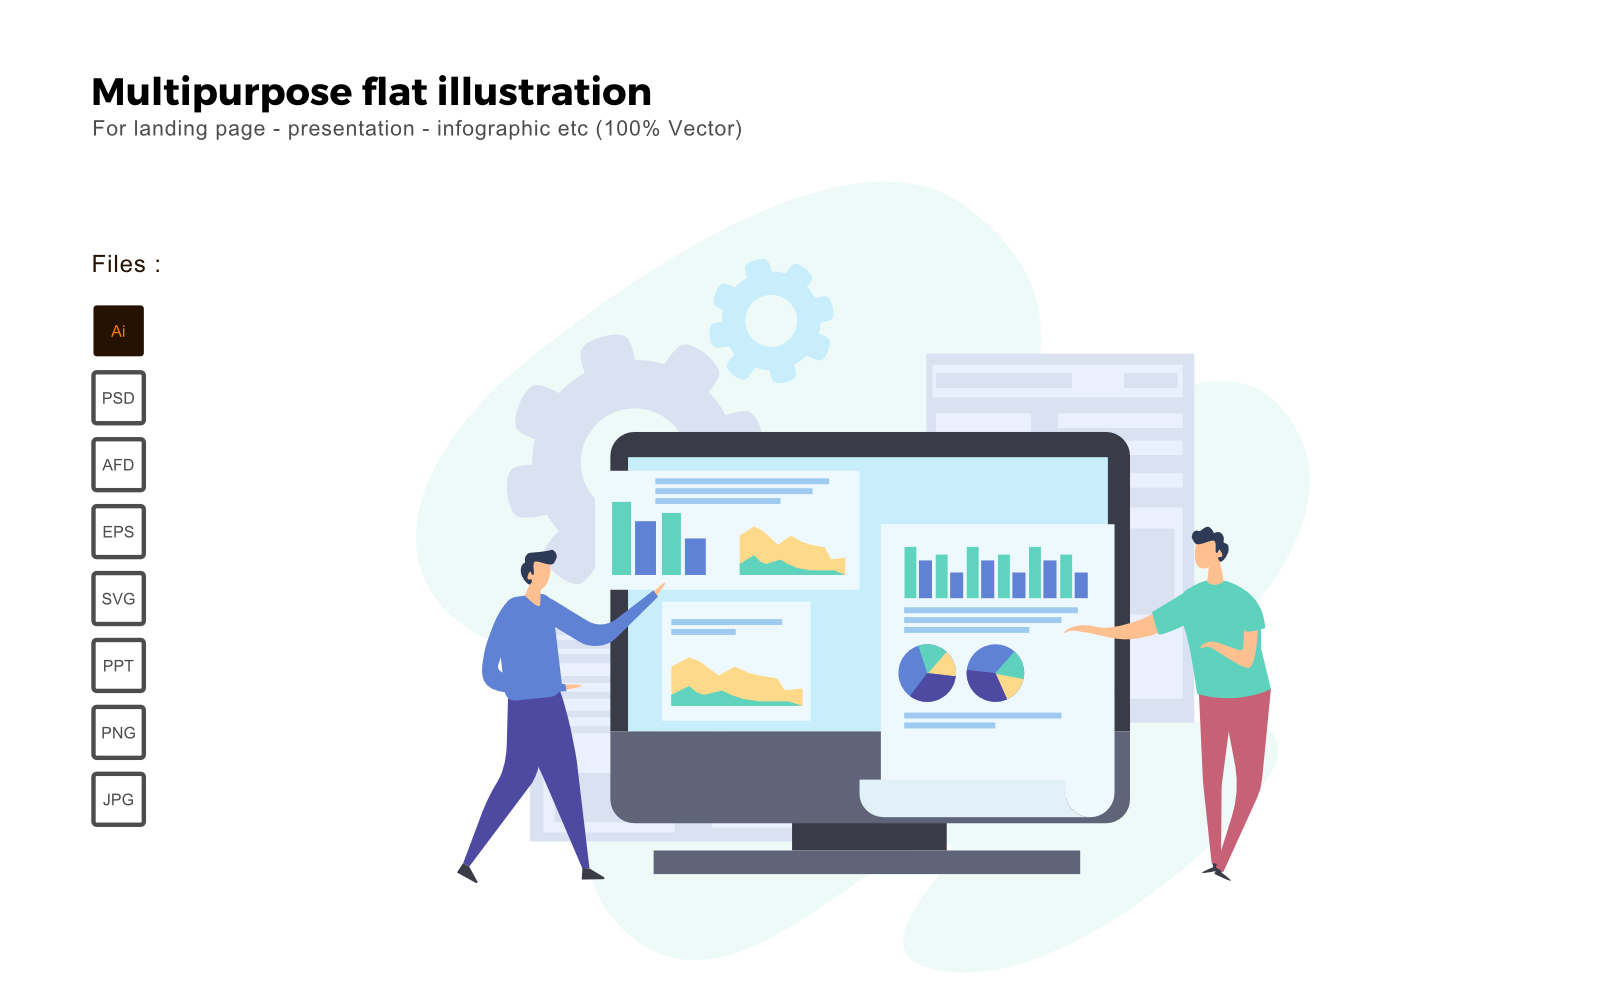 Multipurpose Flat Illustration Data Driven - Vector Image